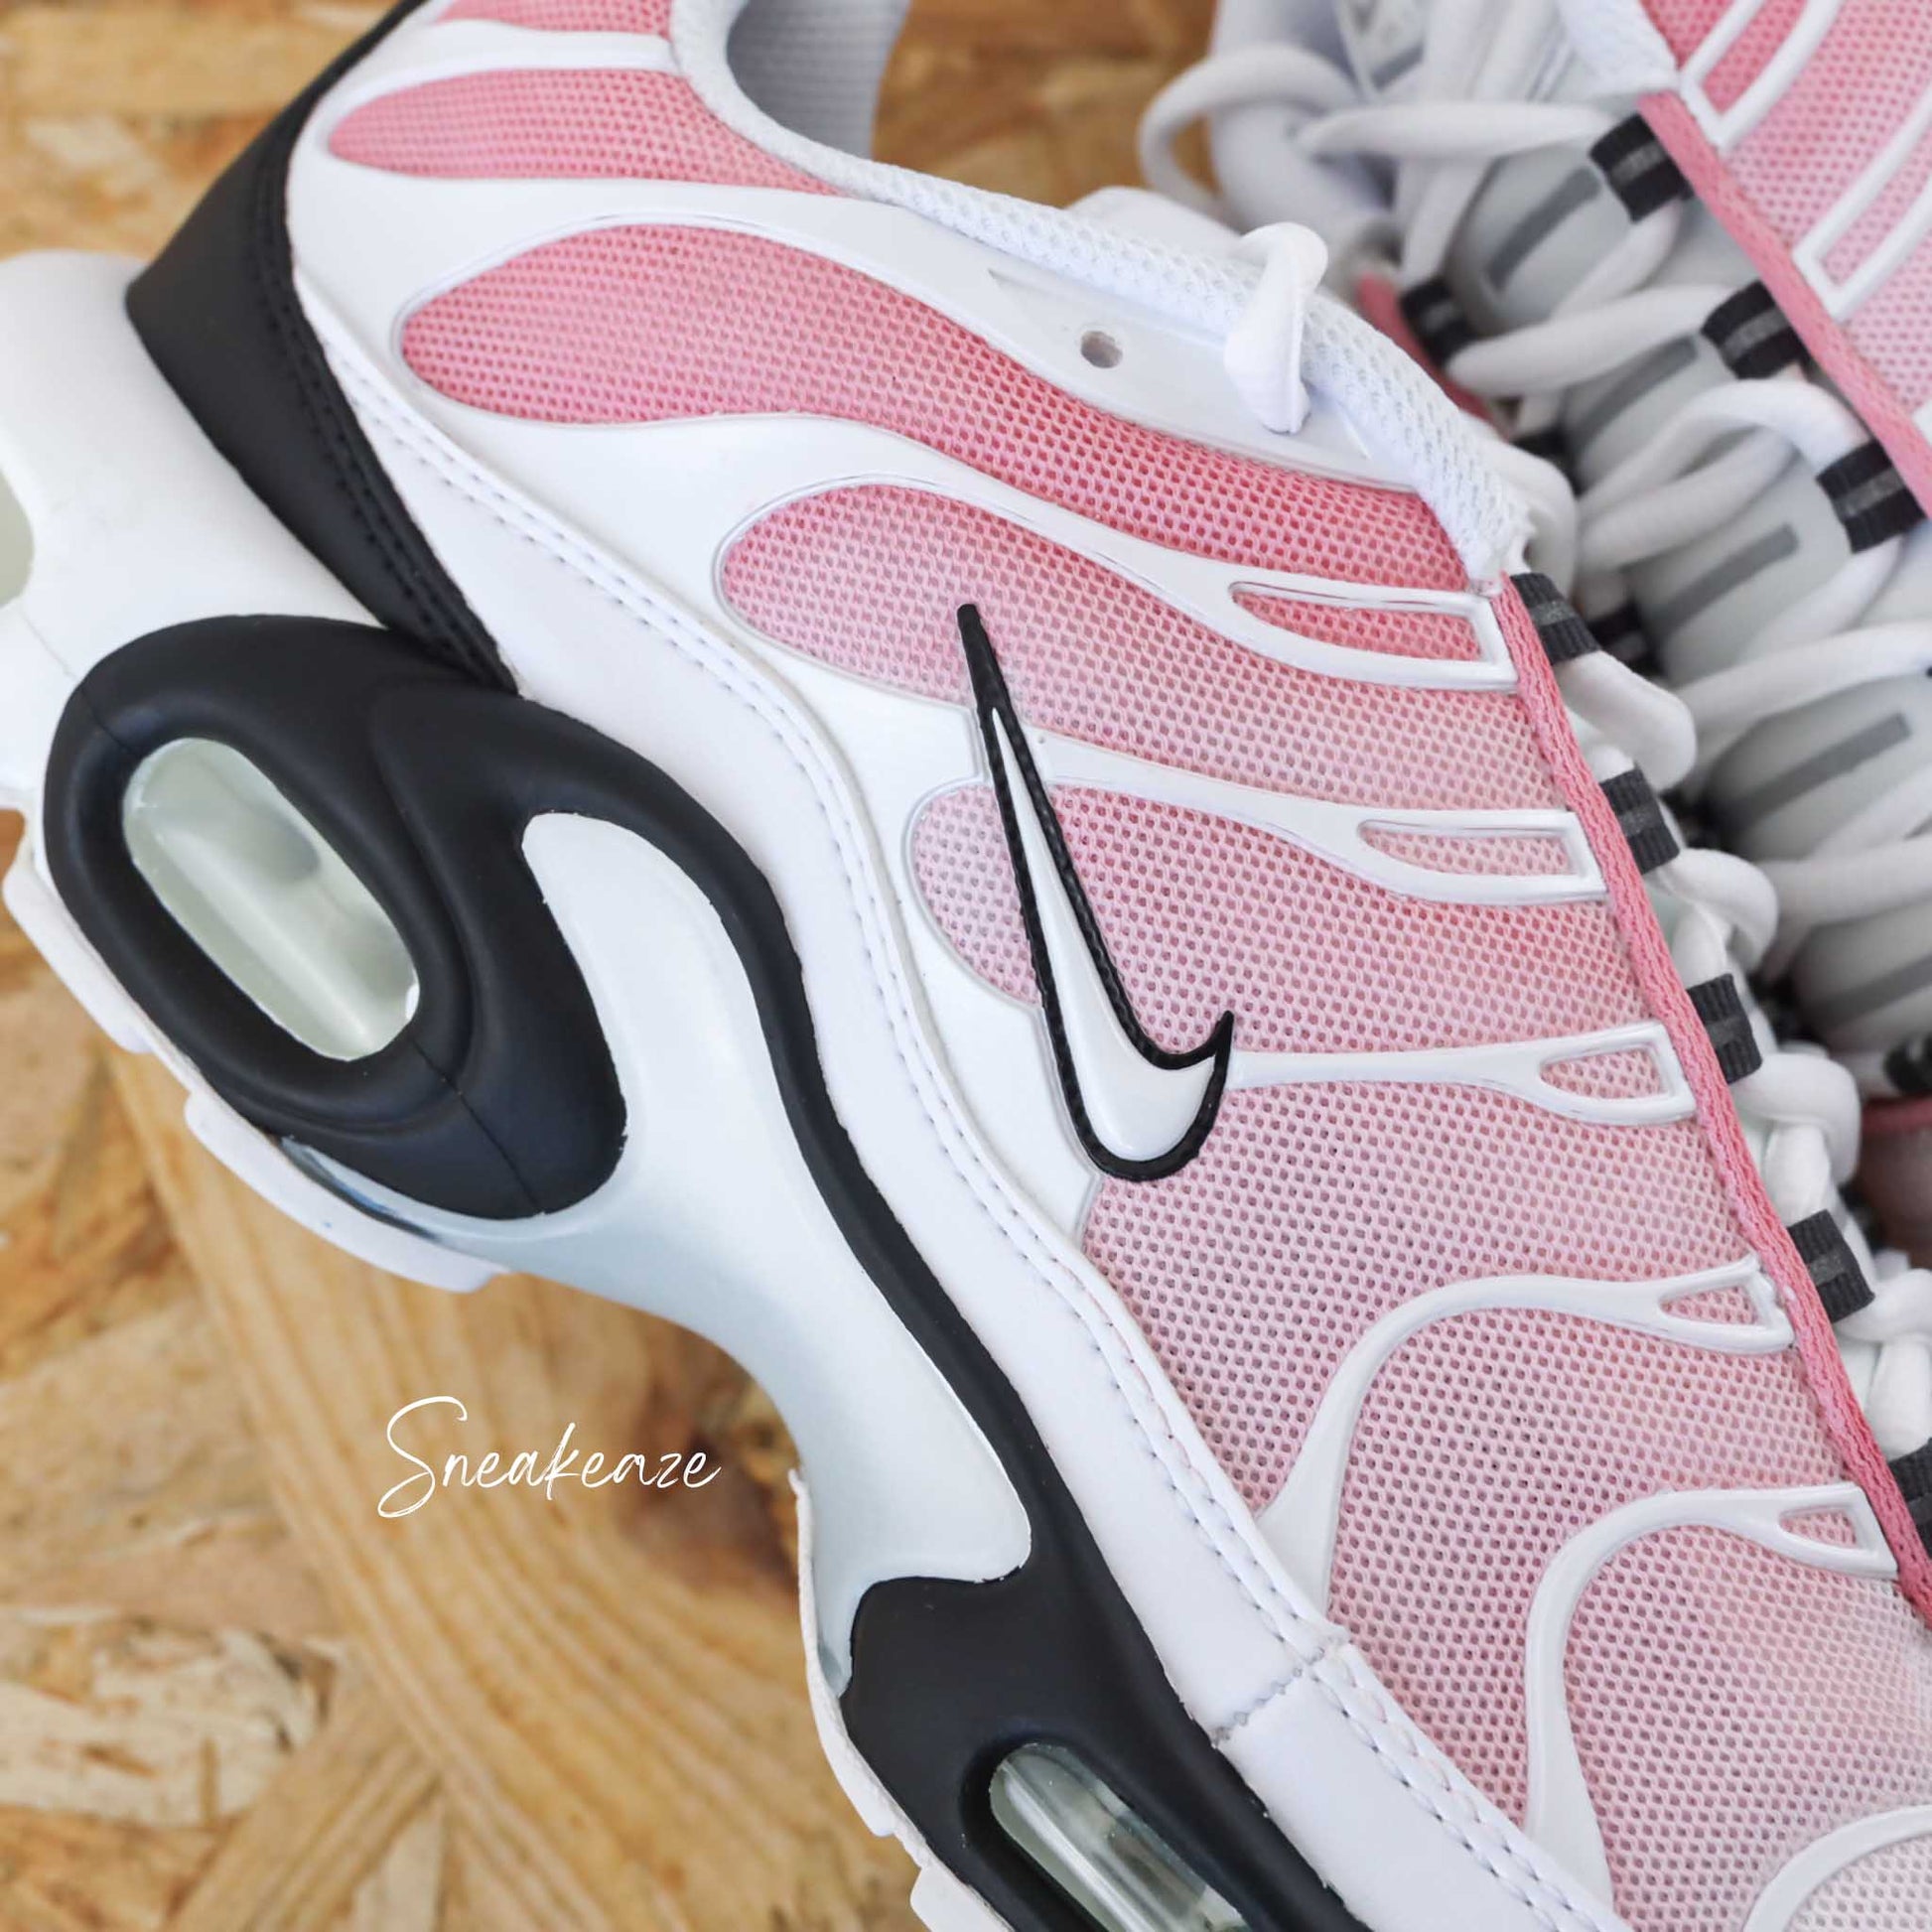 Sneakers Nike Air Max Plus tuned (TN) custom black pink sneakeaze custom skz